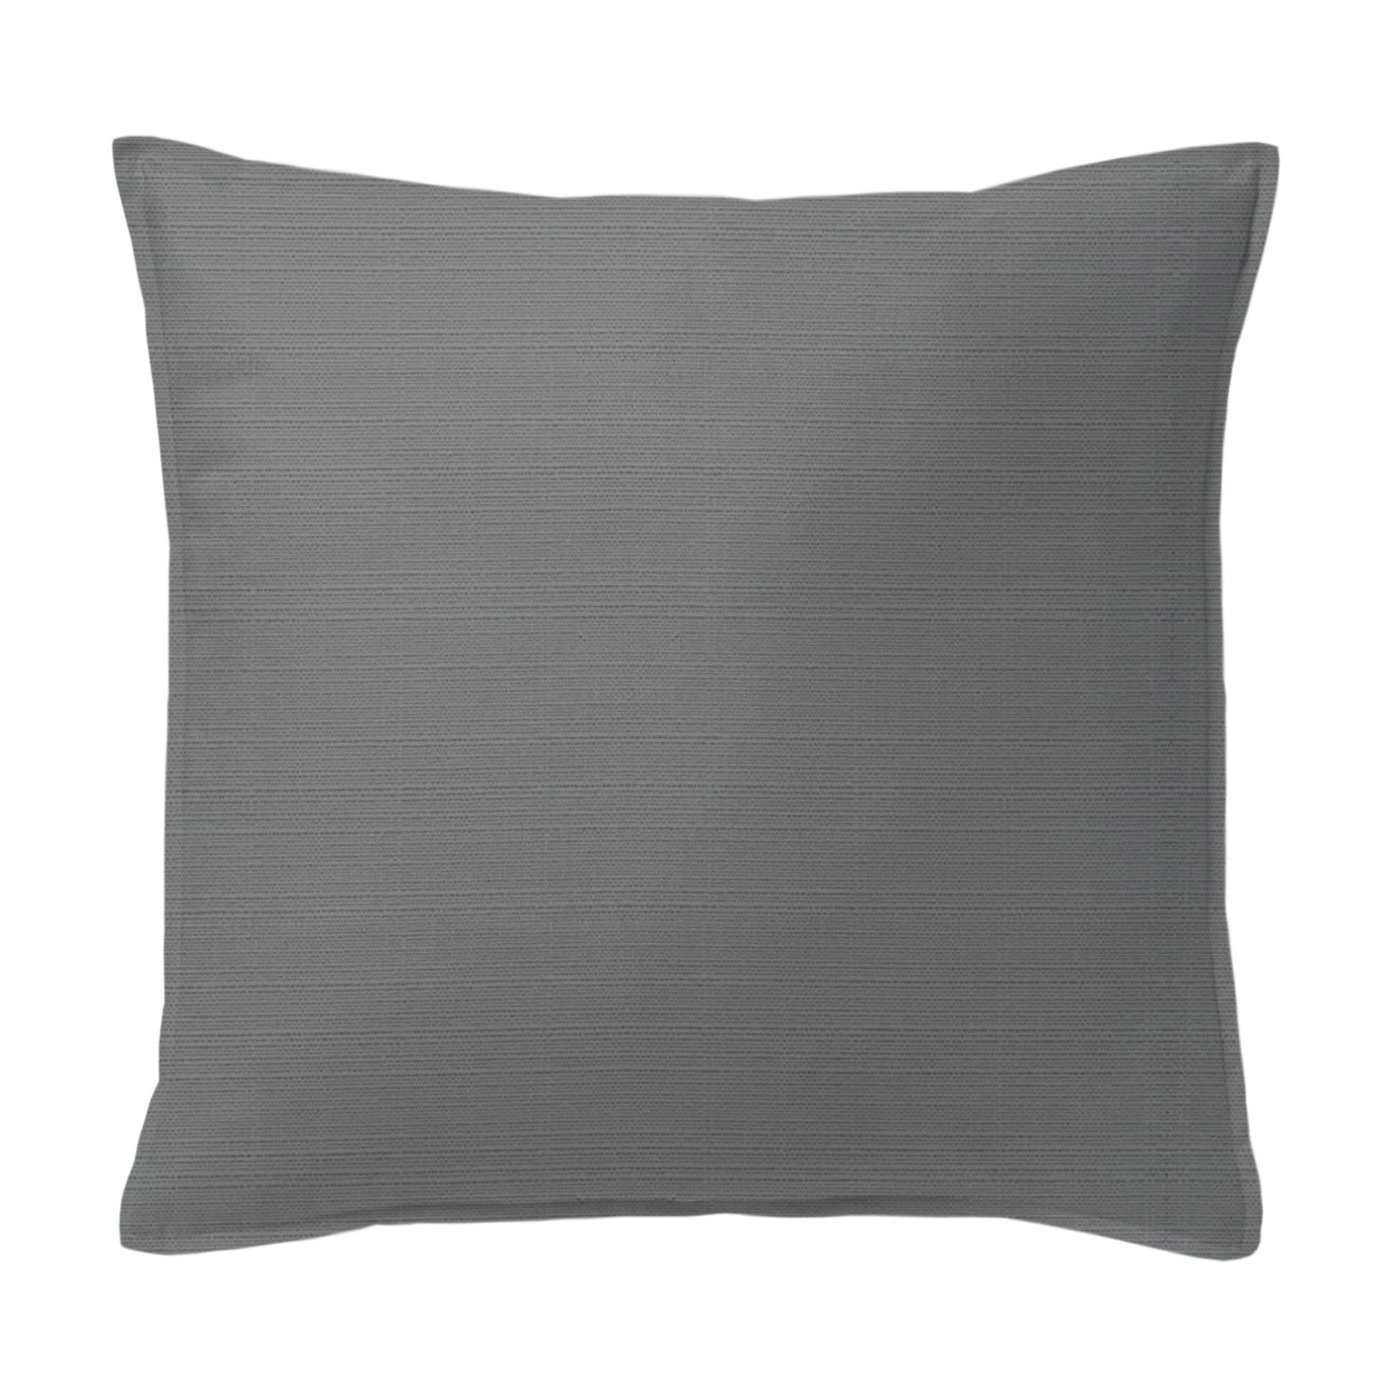 Nova Charcoal Decorative Pillow - Size 20" Square